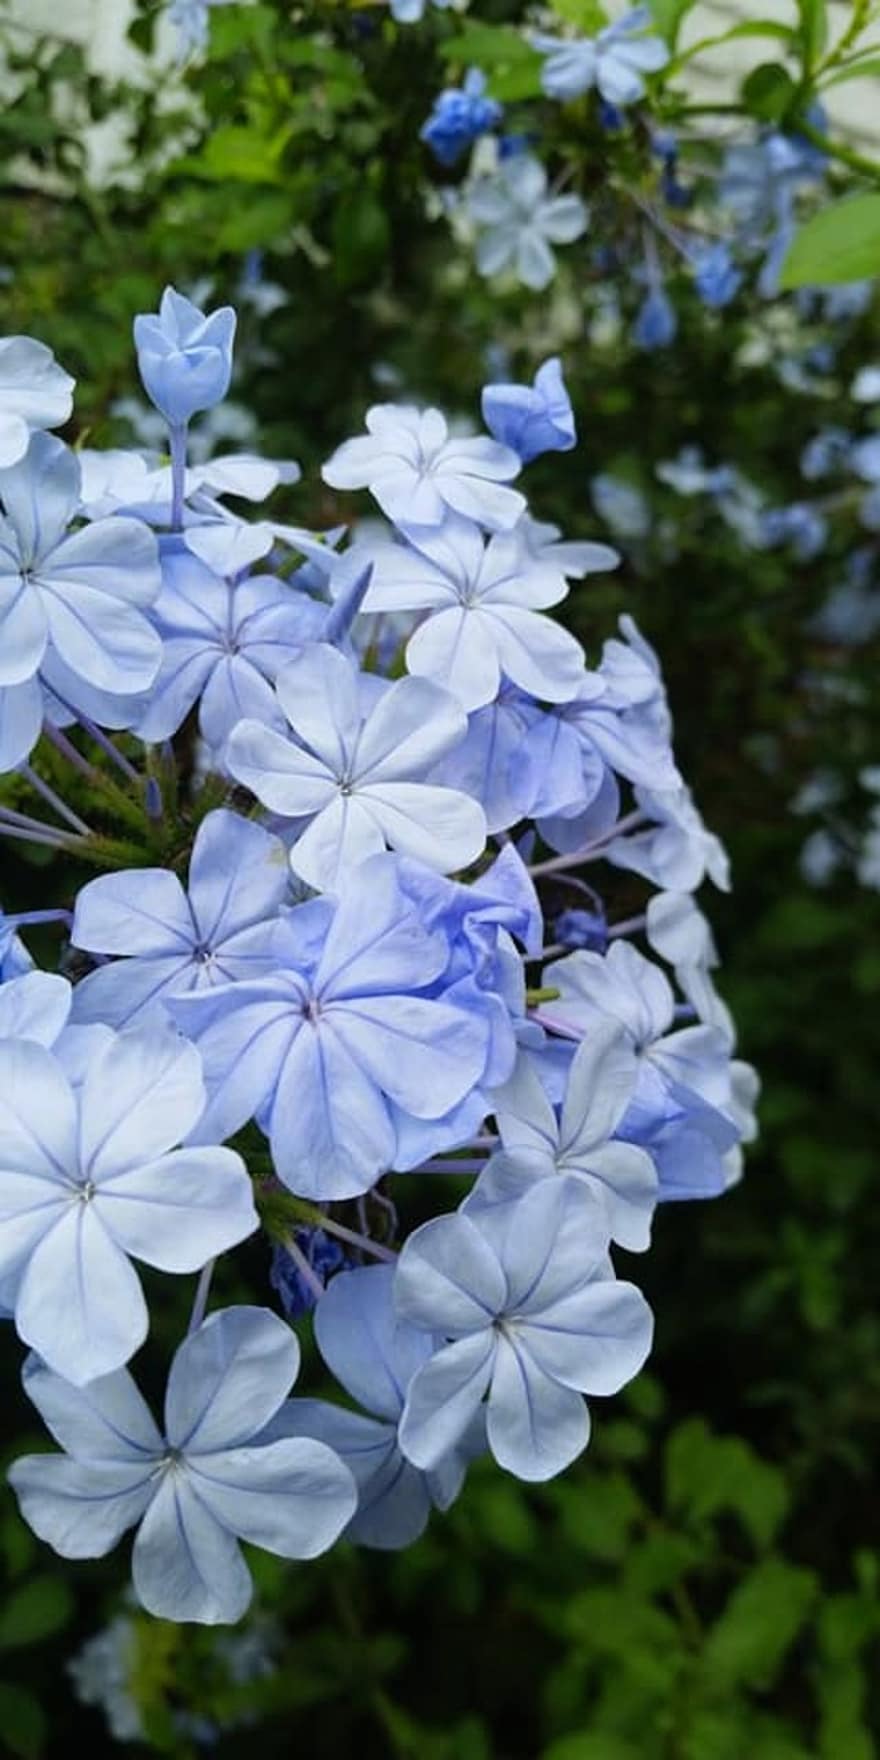 capa de capa, flors, planta, plumbago blau, flors blaves, pètals, florir, primavera, jardí, naturalesa